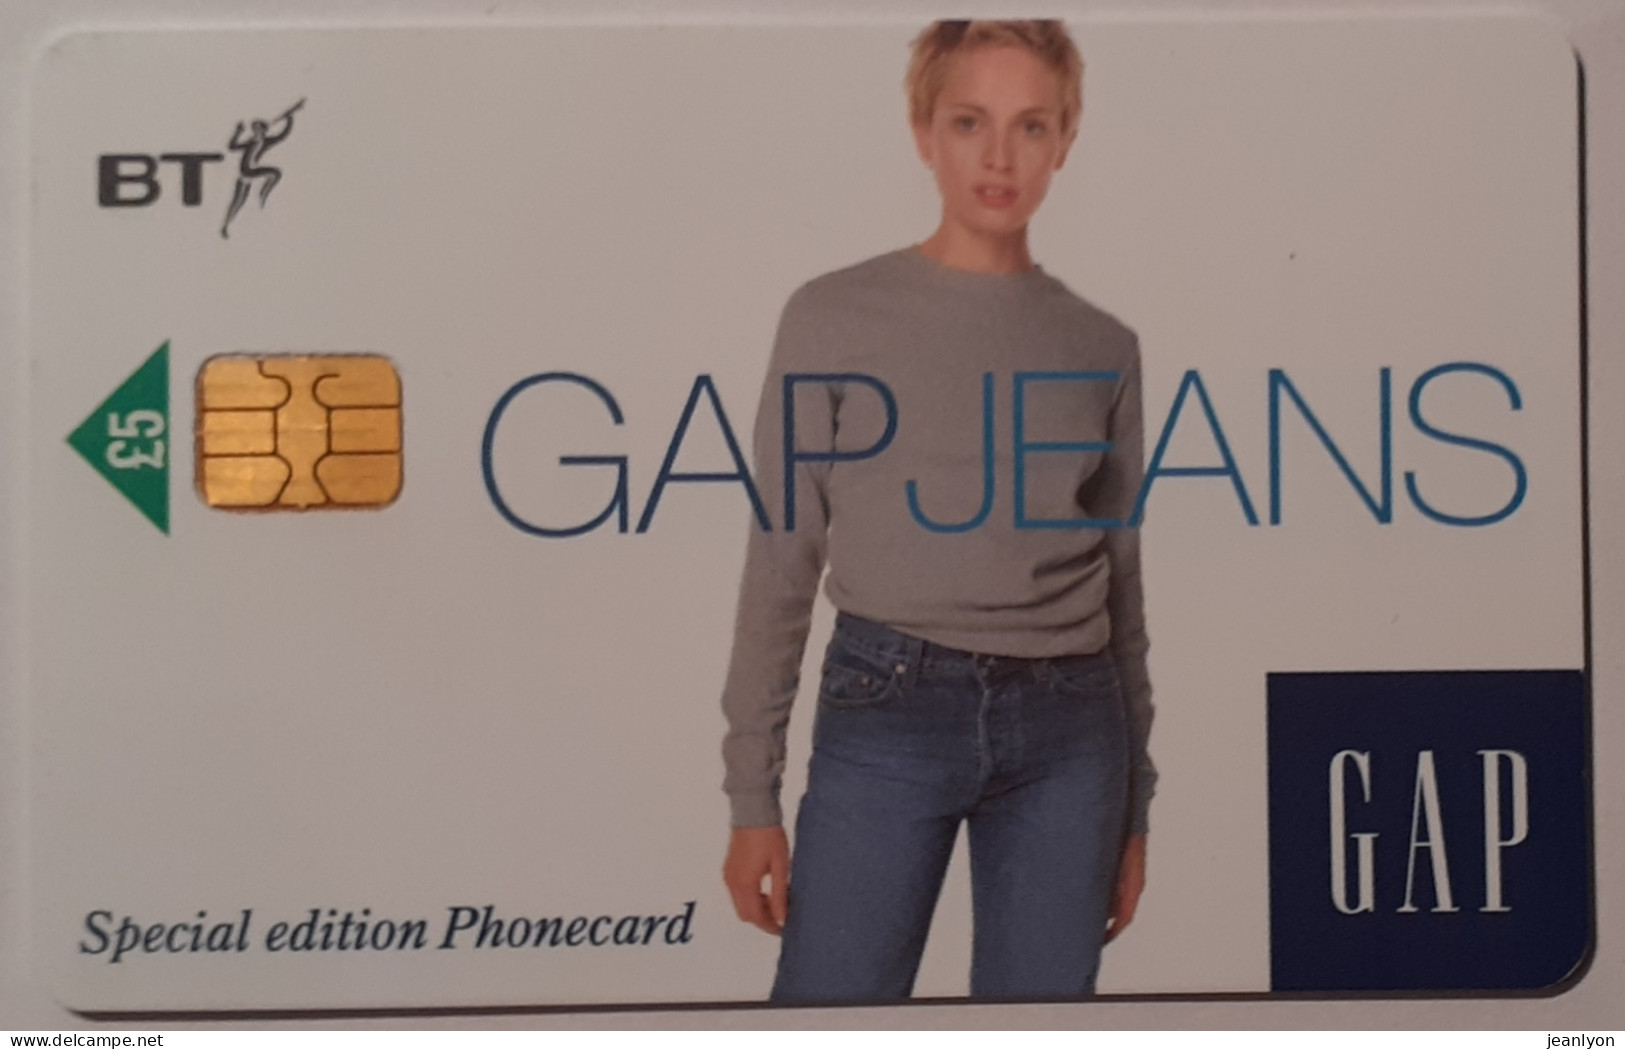 MODE - GAP JEANS / PANTALON - Carte Téléphone Brisith Telecom - Moda